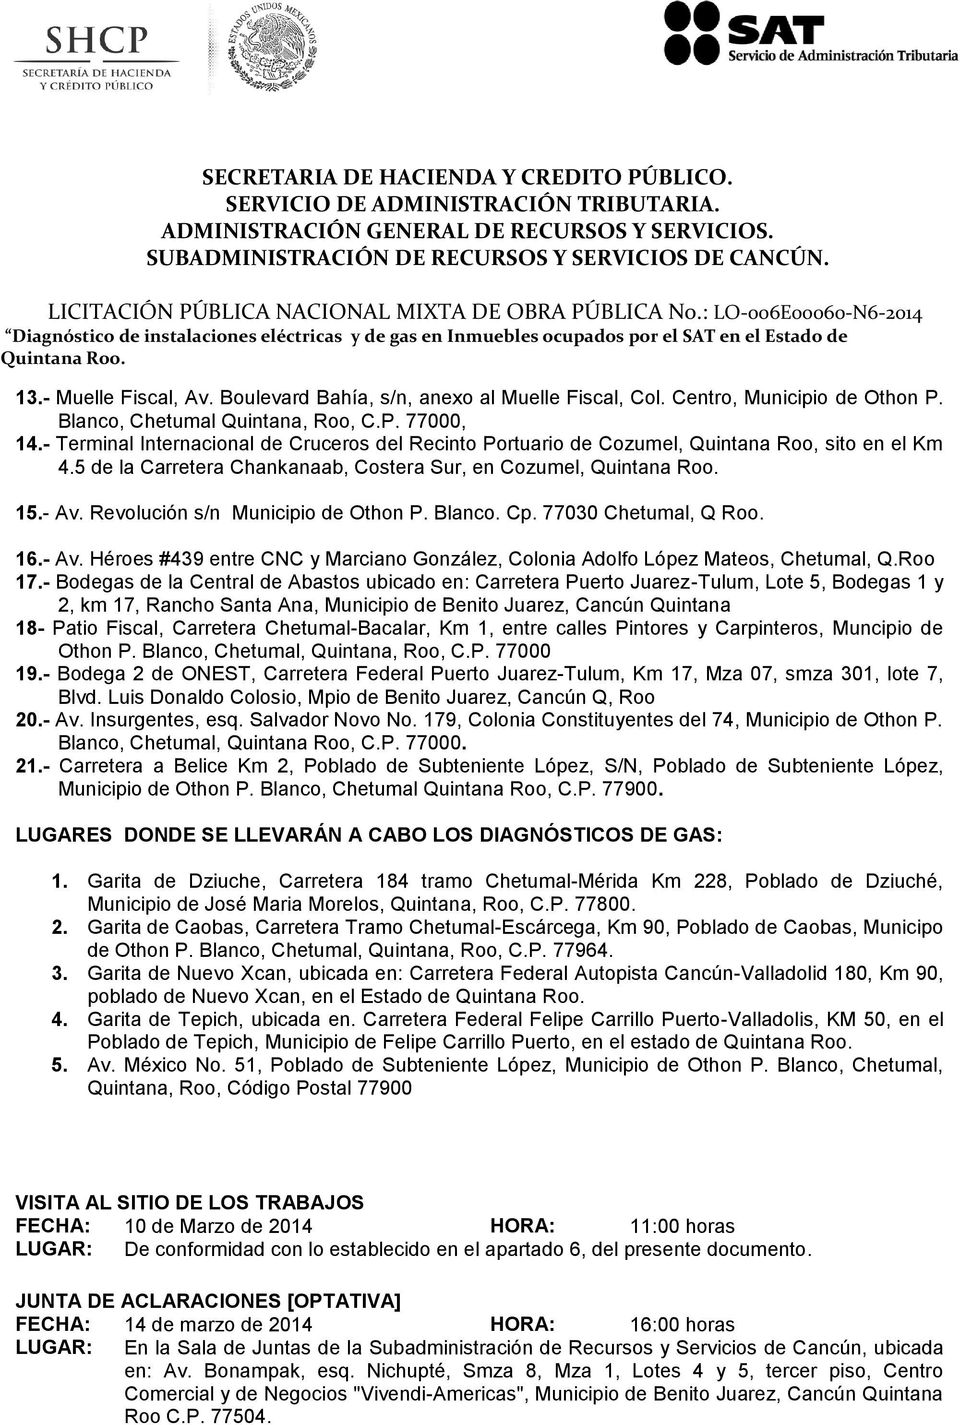 - Muelle Fiscal, Av. Boulevard Bahía, s/n, anexo al Muelle Fiscal, Col. Centro, Municipio de Othon P. Blanco, Chetumal Quintana, Roo, C.P. 77000, 14.